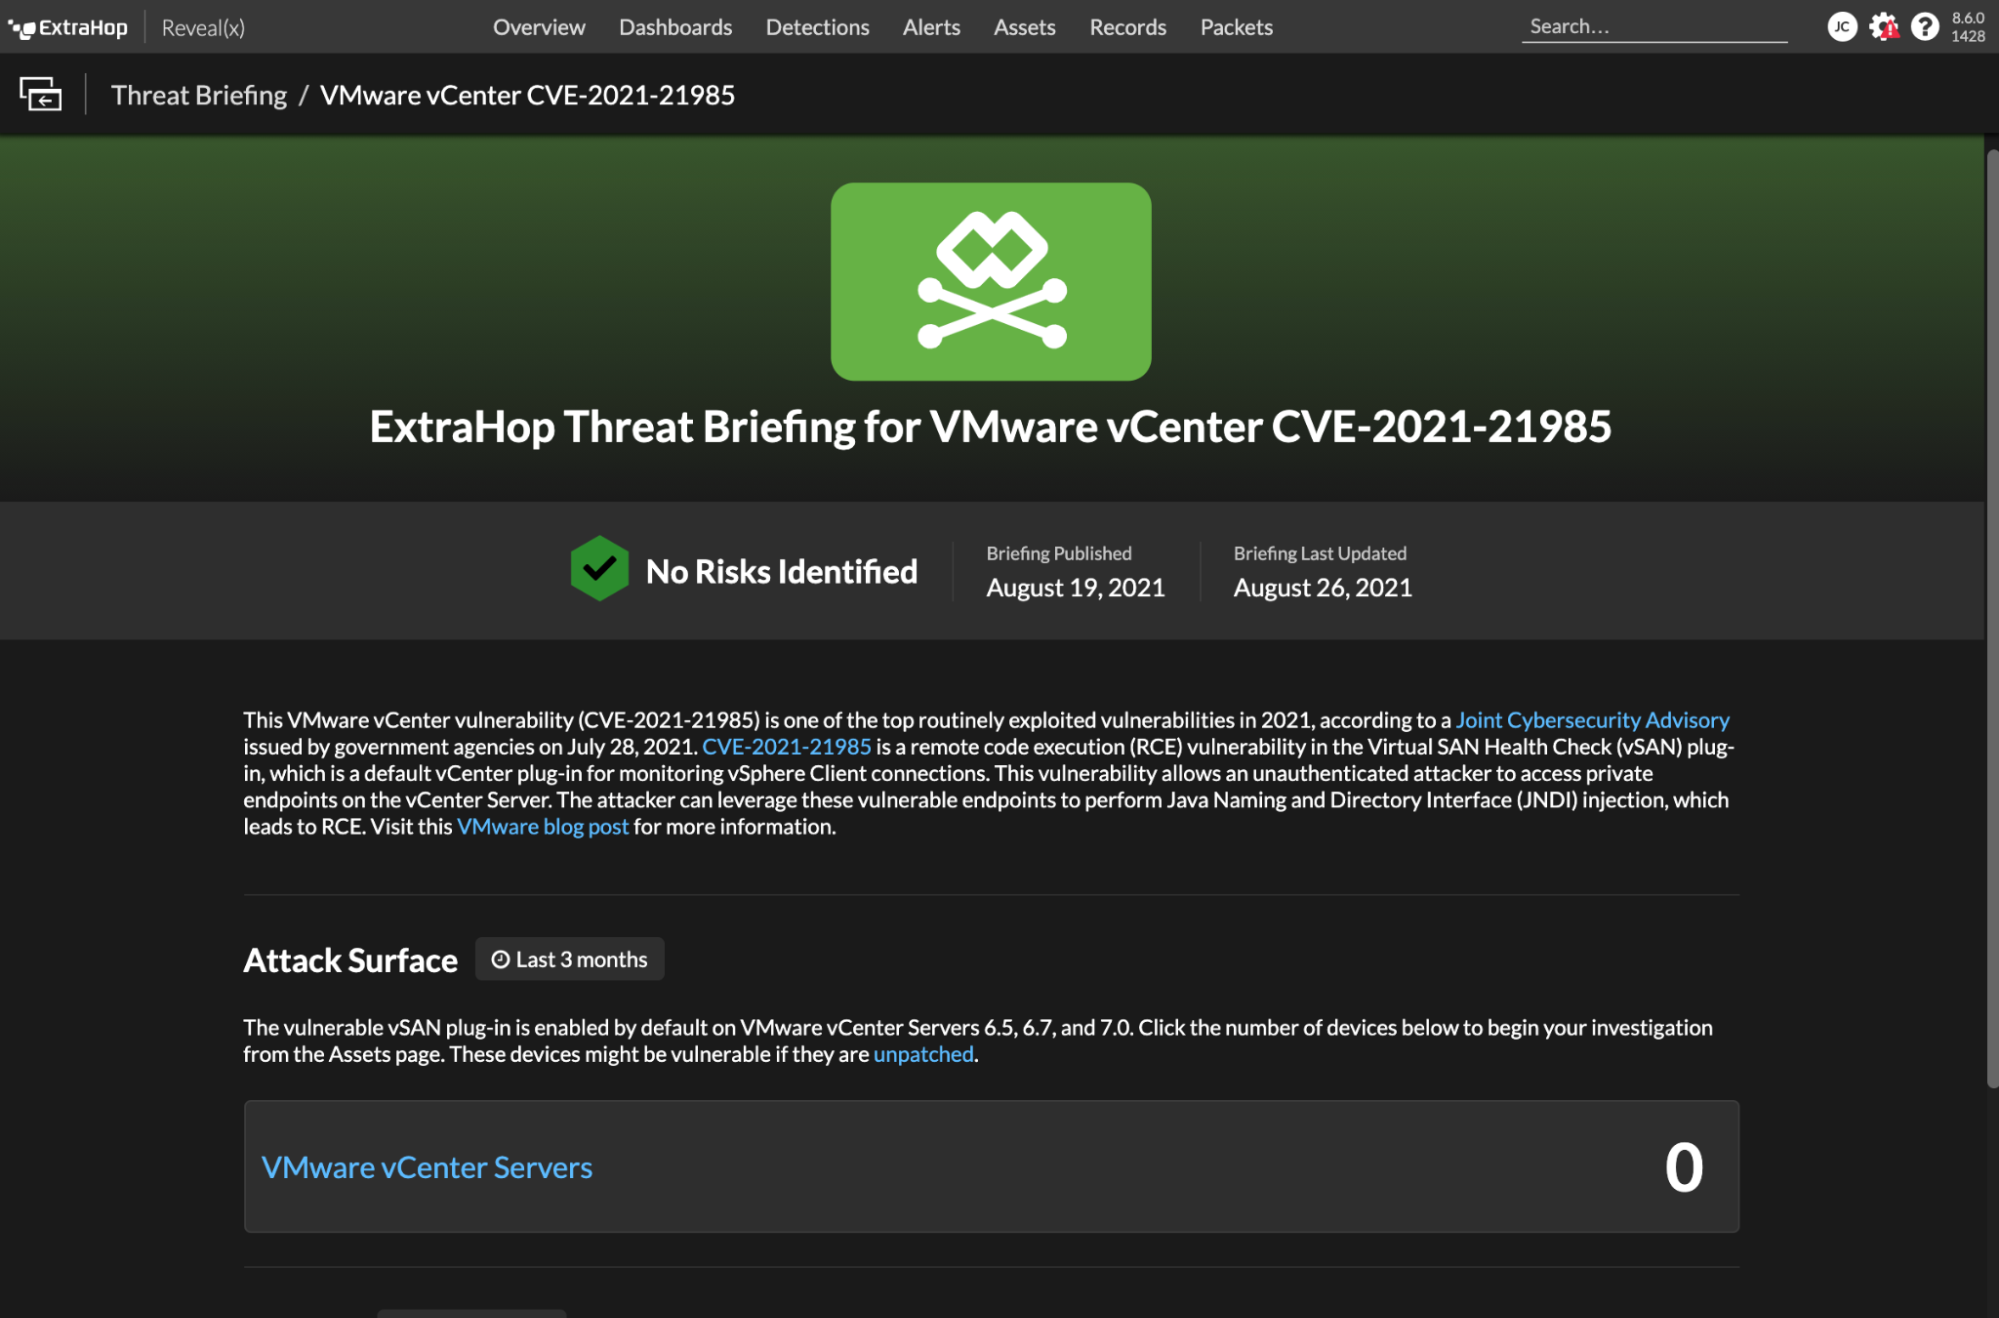 Threat Briefing for vCenter CVE-2021-21985